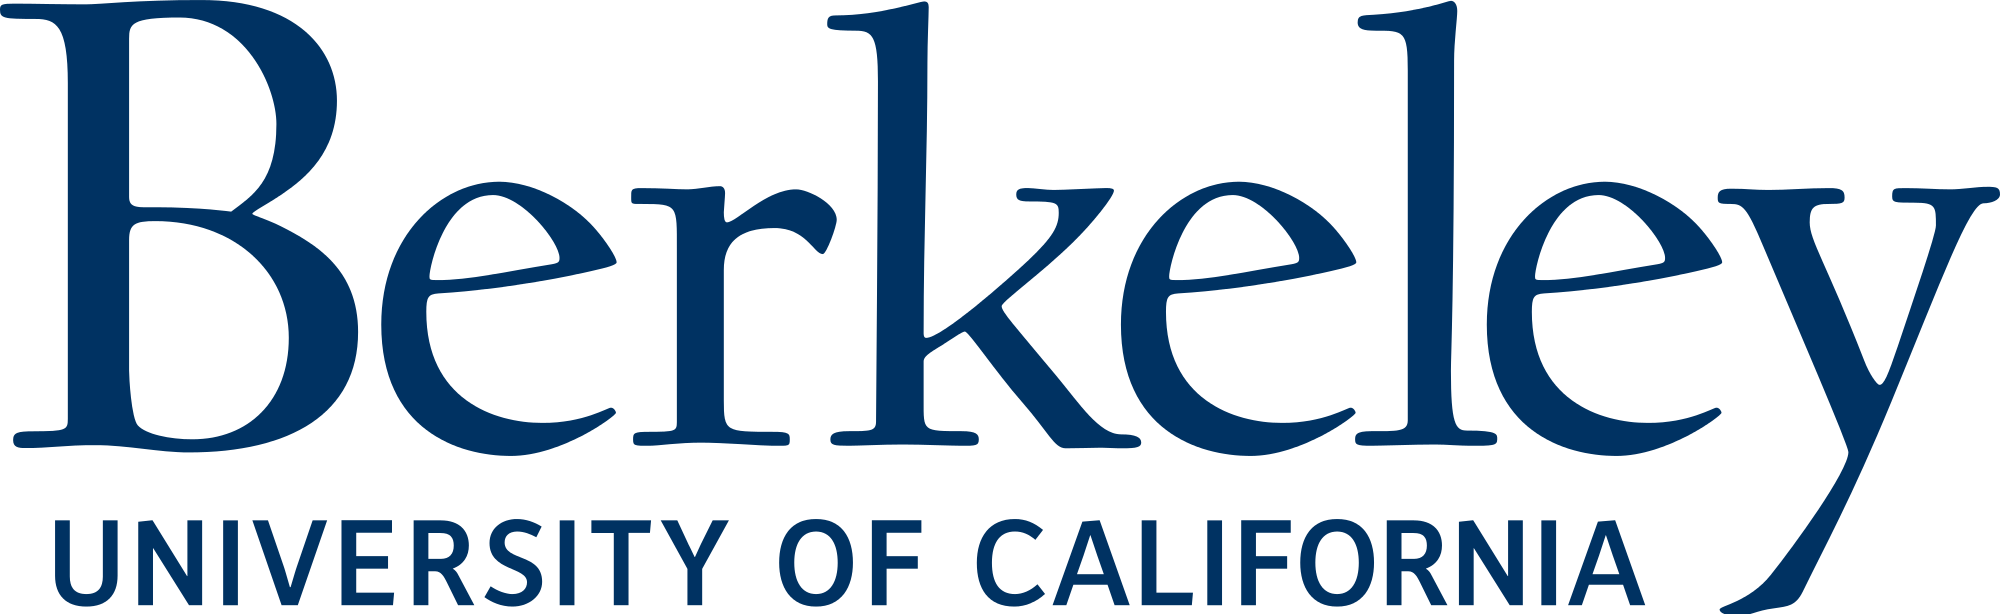 Campanile Berkeley Sticker - Clip Art Library